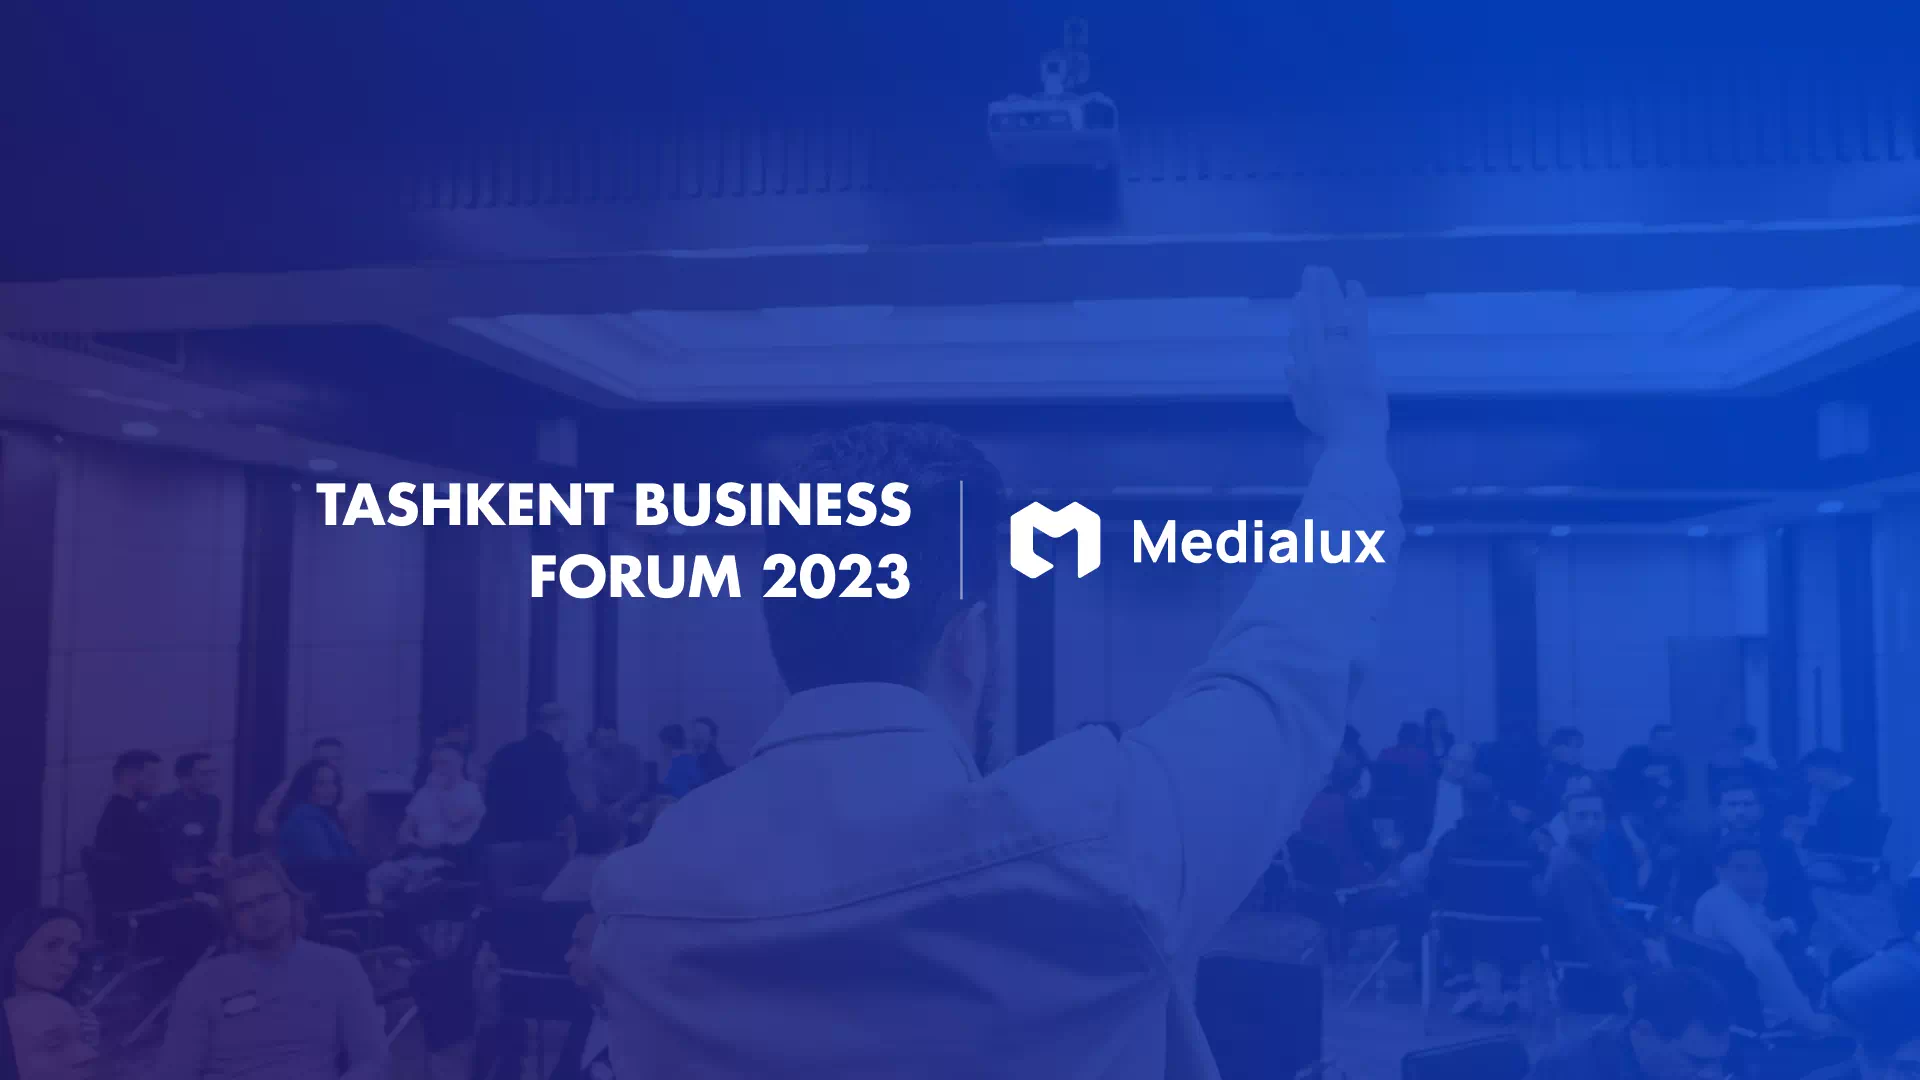 Media Lux - media partner of TASHKENT BUSINESS FORUM 2023